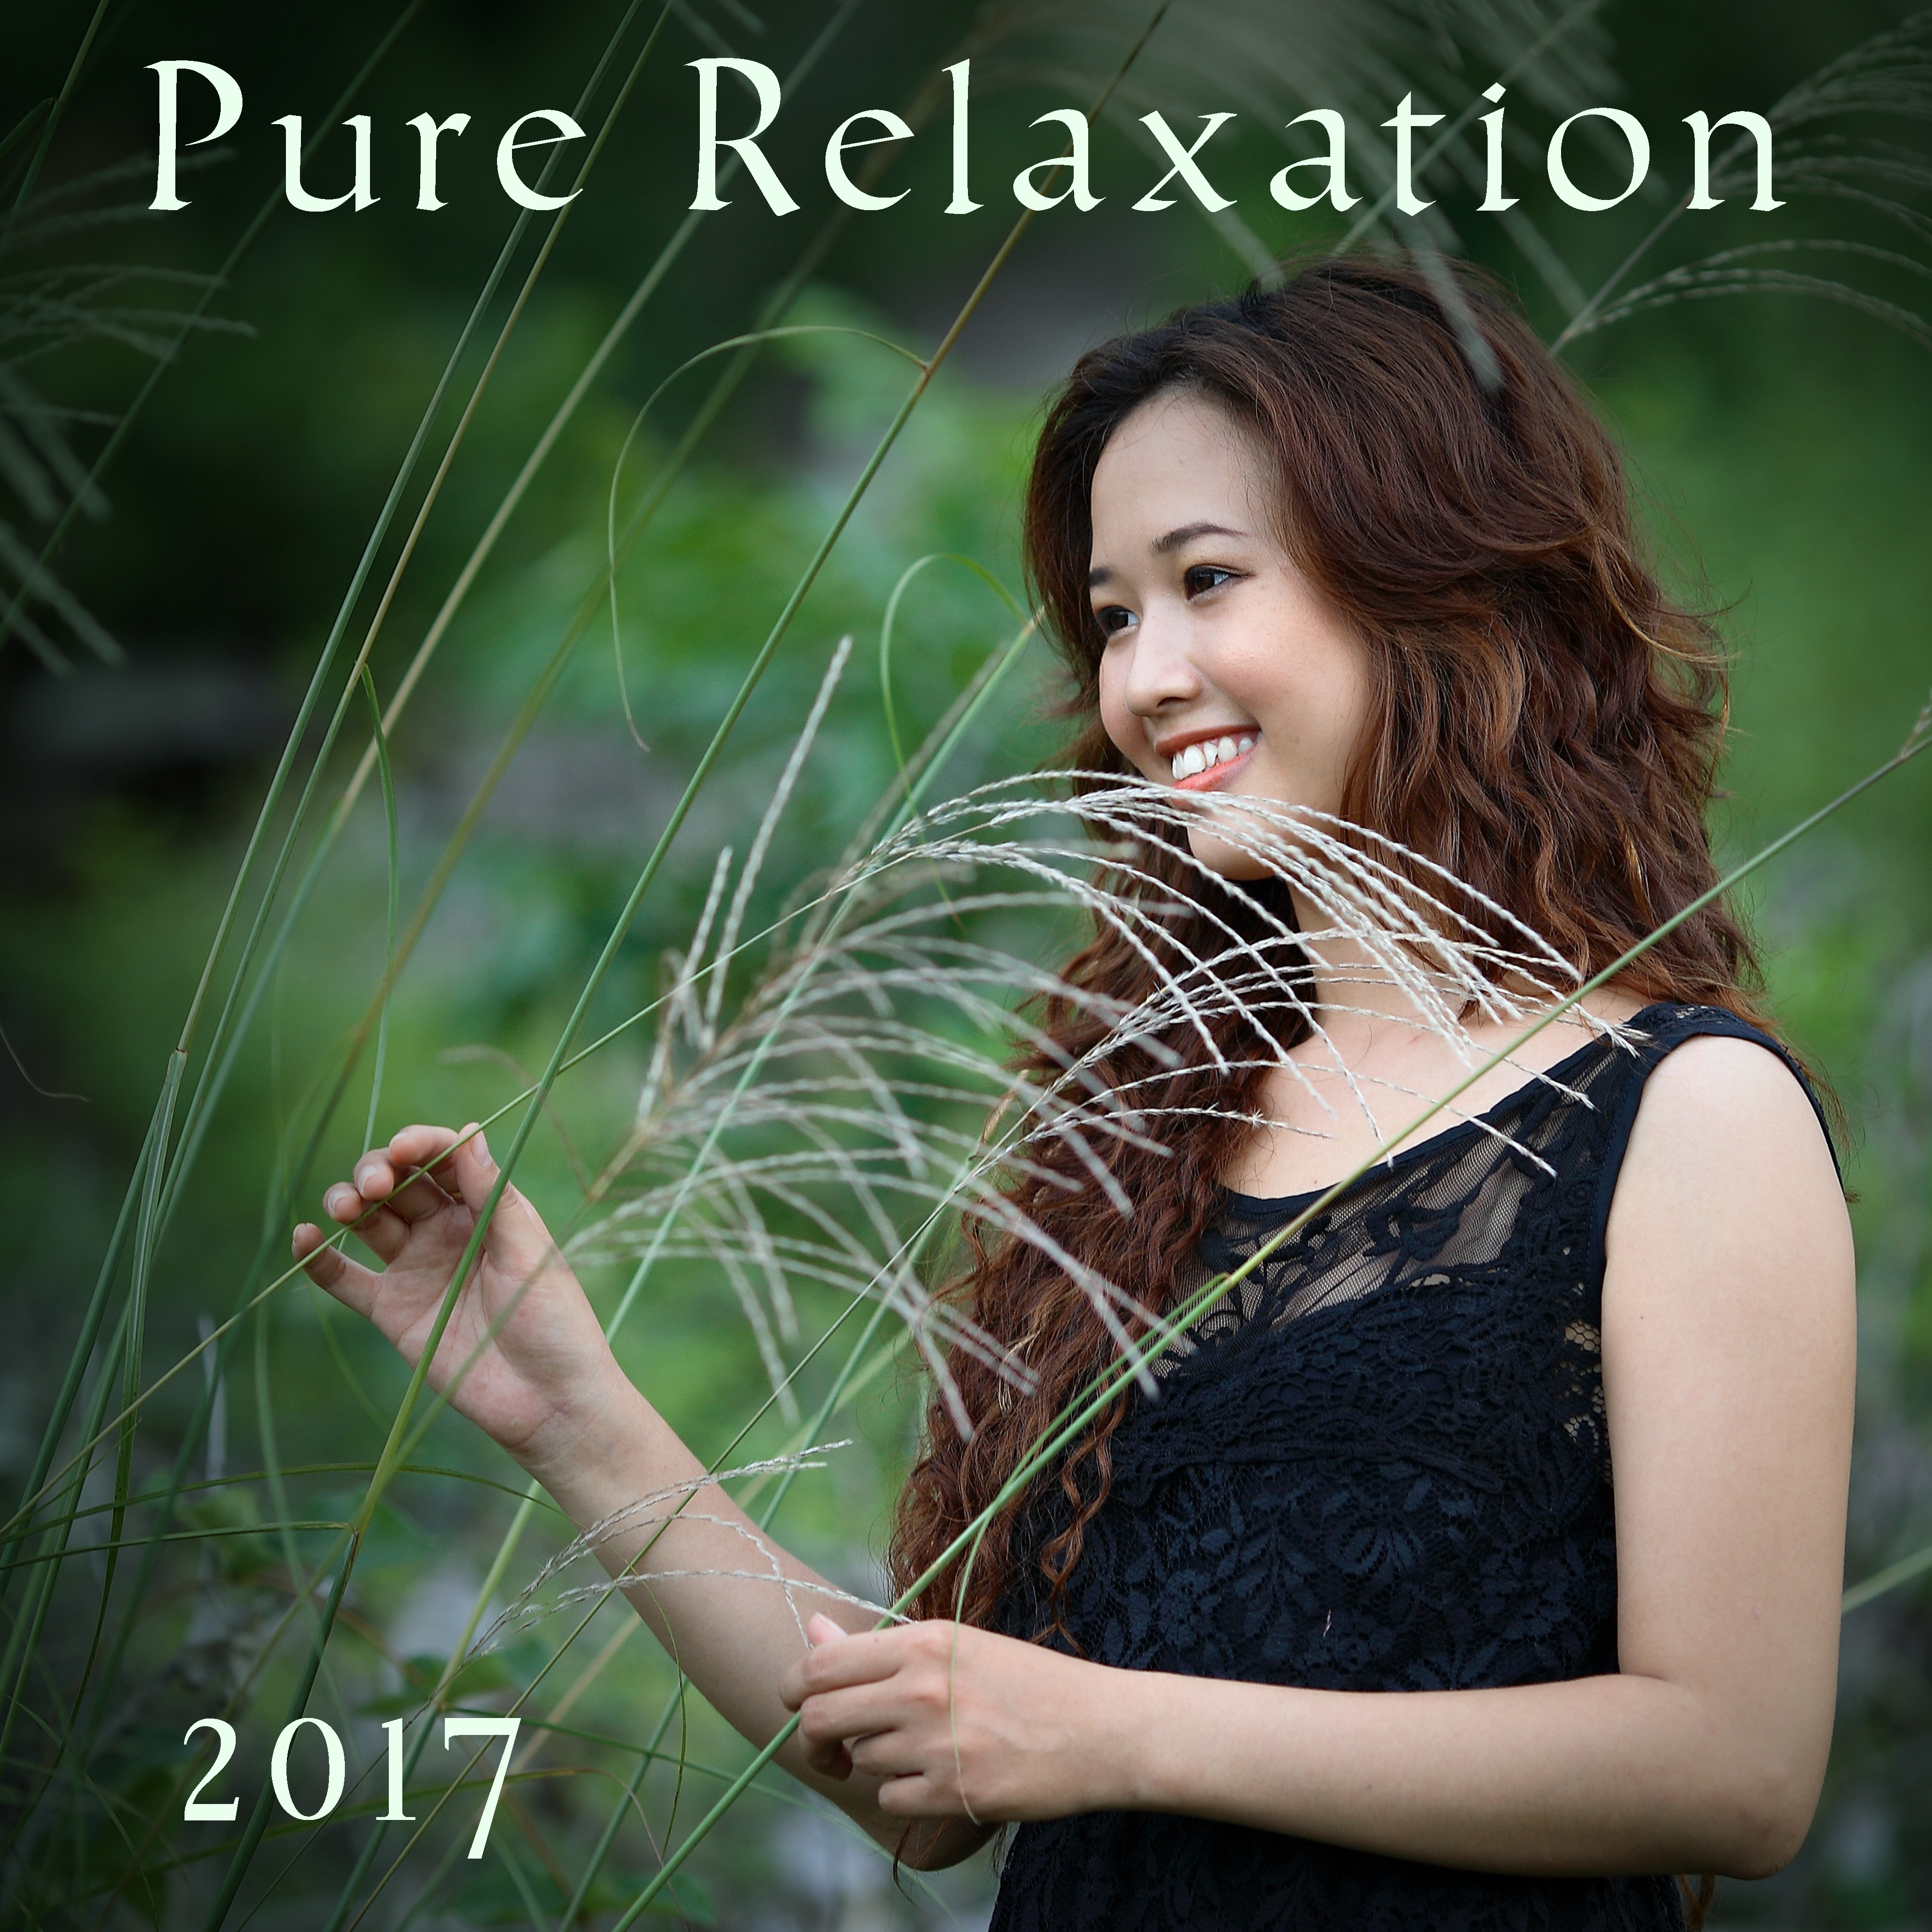 Pure Relaxation 2017 – Nature Sounds, Relaxing Music, Deep Meditation, Rest, Relief Stress, Zen